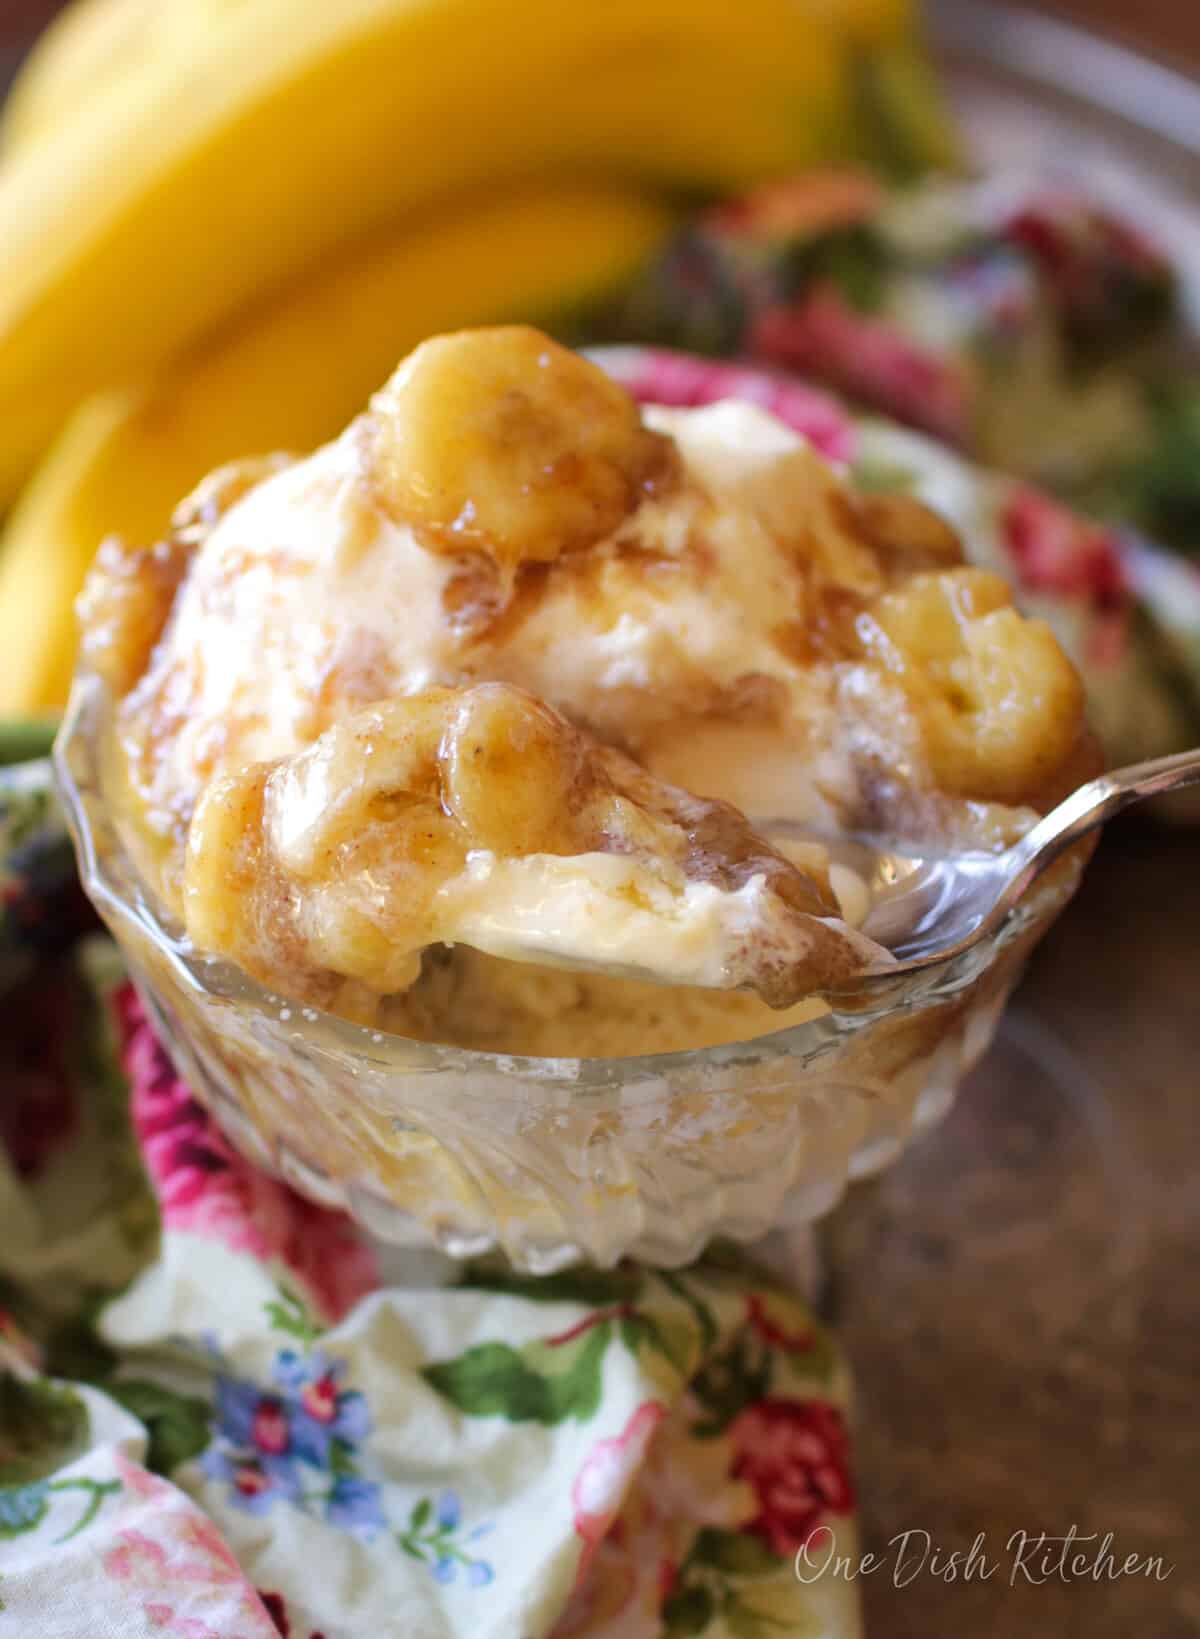 bananas foster over ice cream in a small dessert dish.